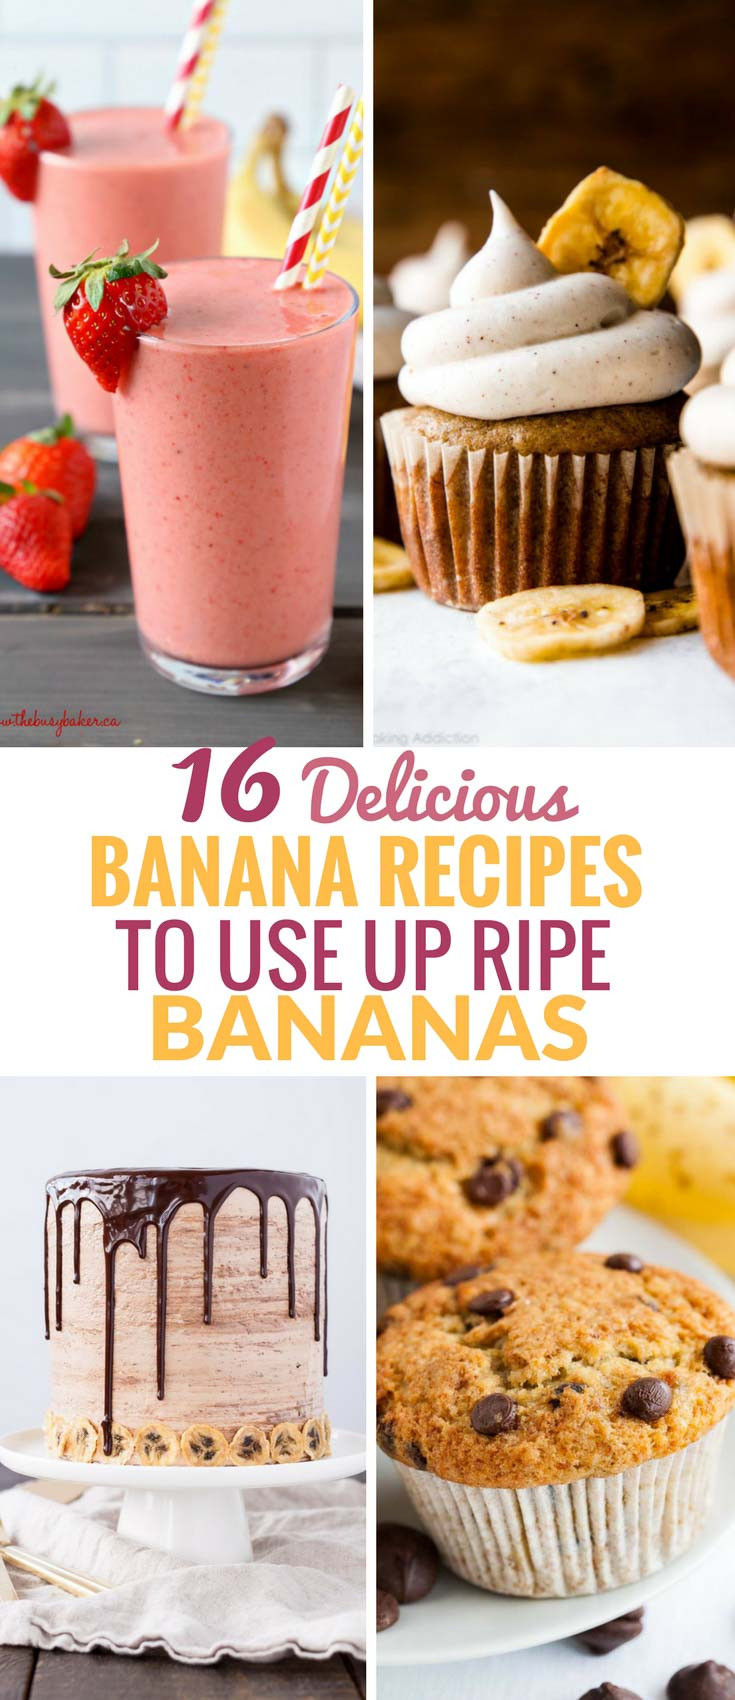 Recipes For Ripe Bananas Other Than Banana Bread
 16 Delicious Recipes to Use up Ripe Bananas